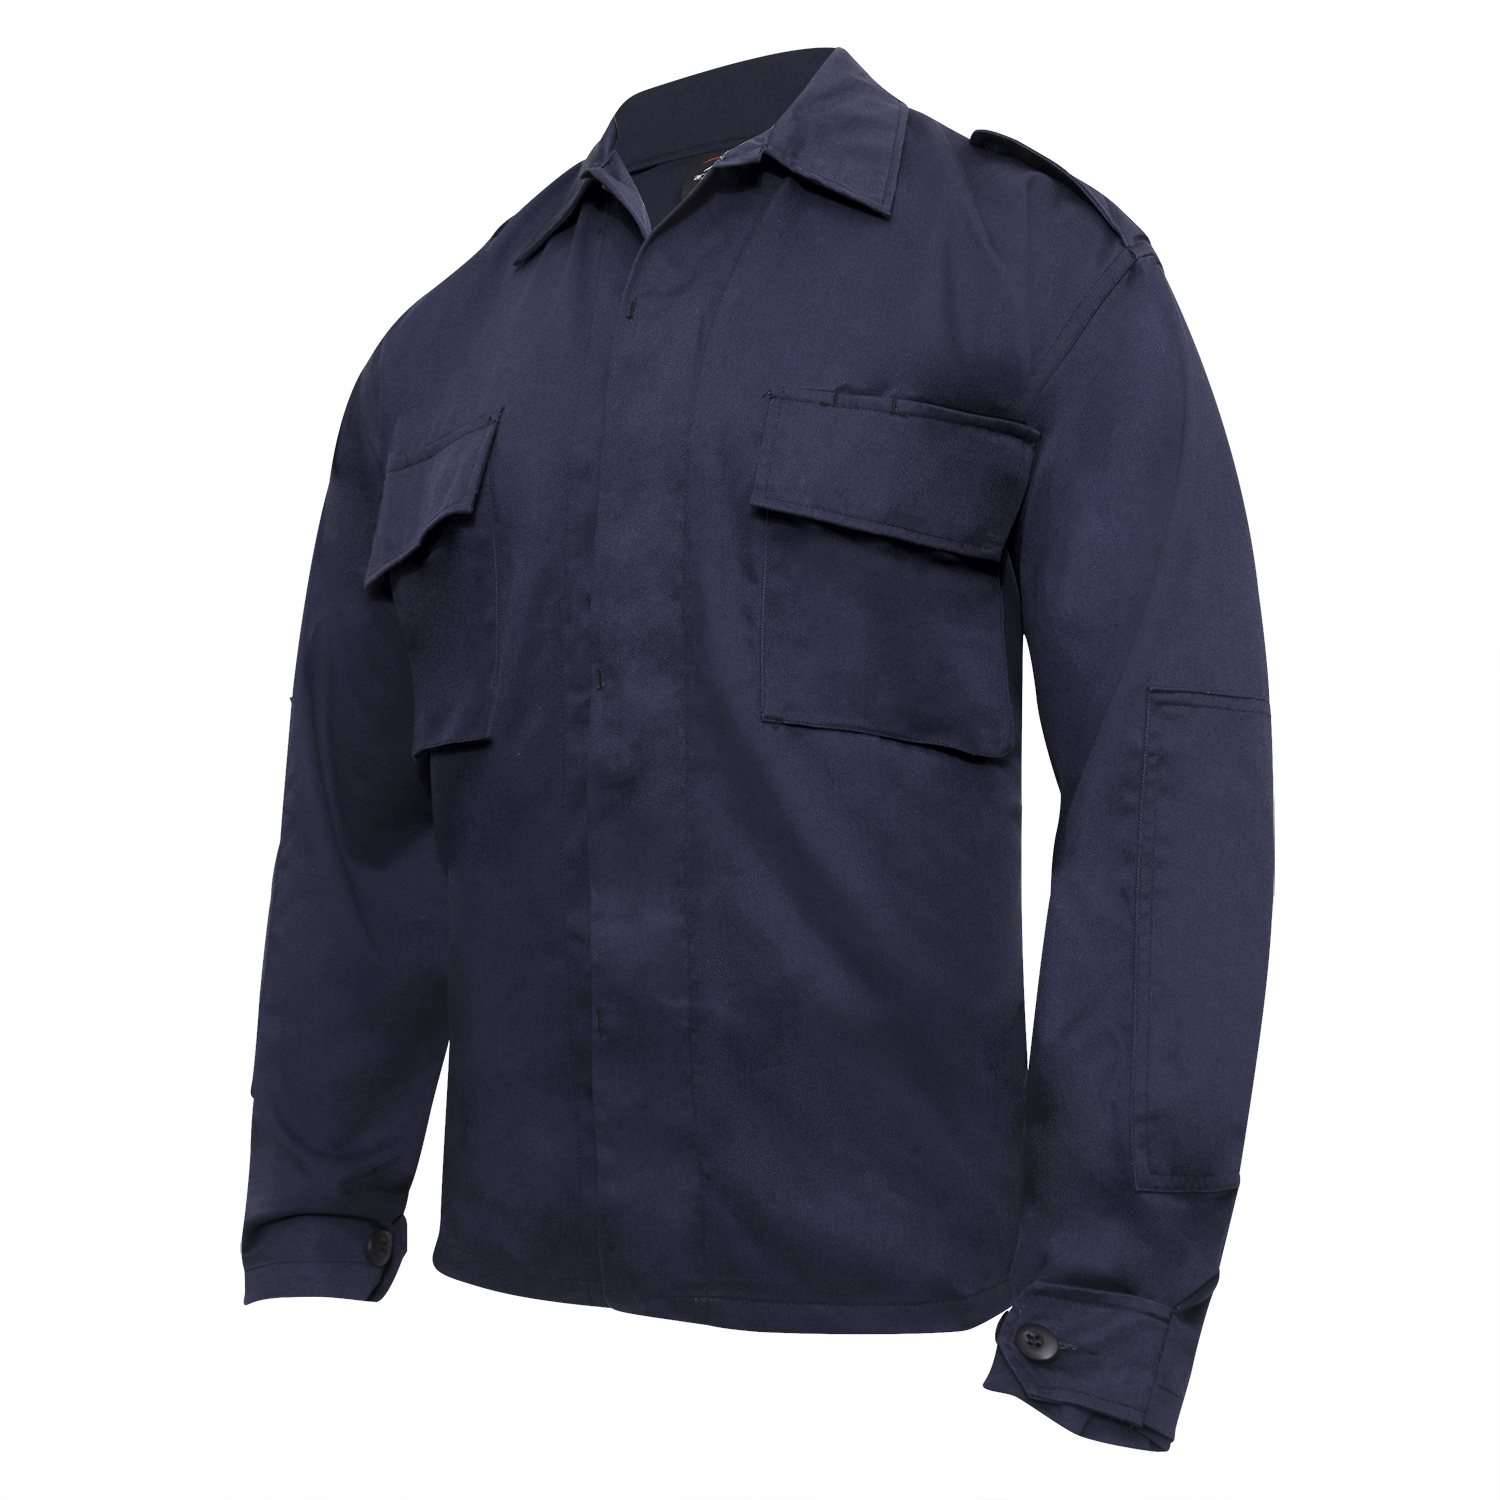 Tactical BDU shirt long sleeve BLUE ROTHCO 6110 L-11